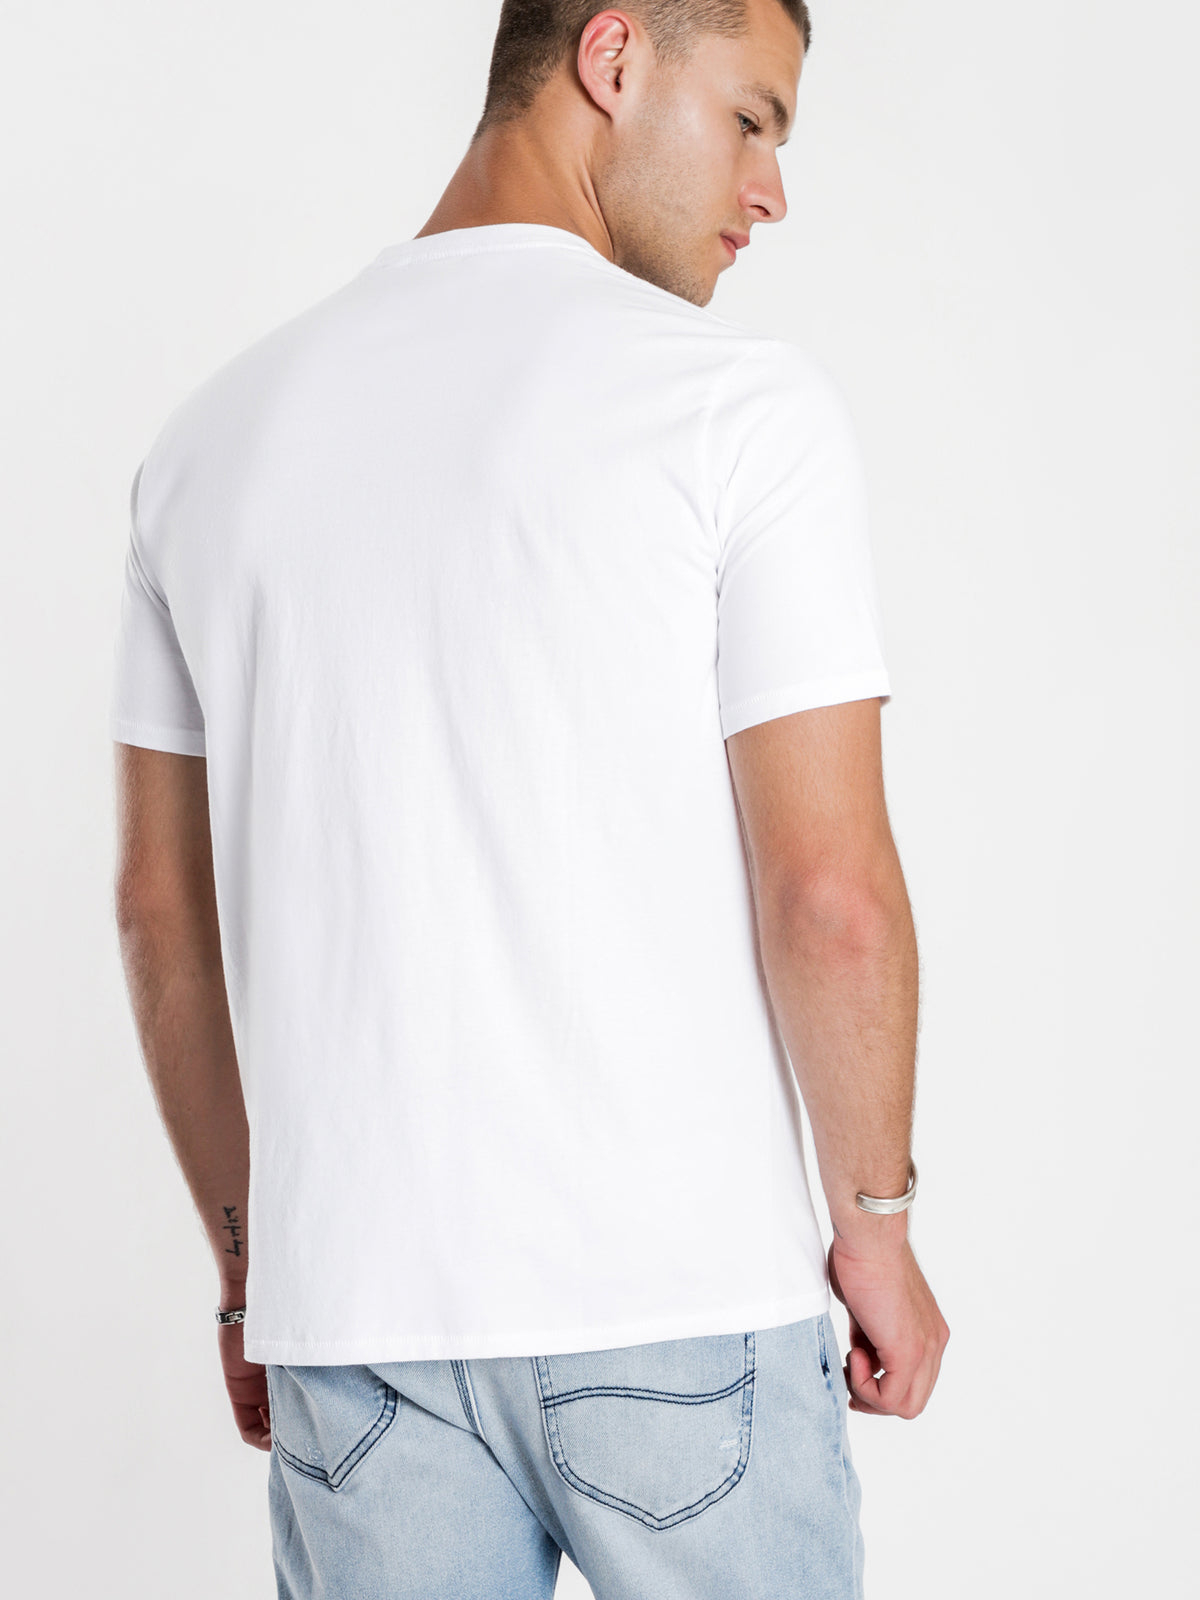 B.Cools Retro Embro T-Shirt in White